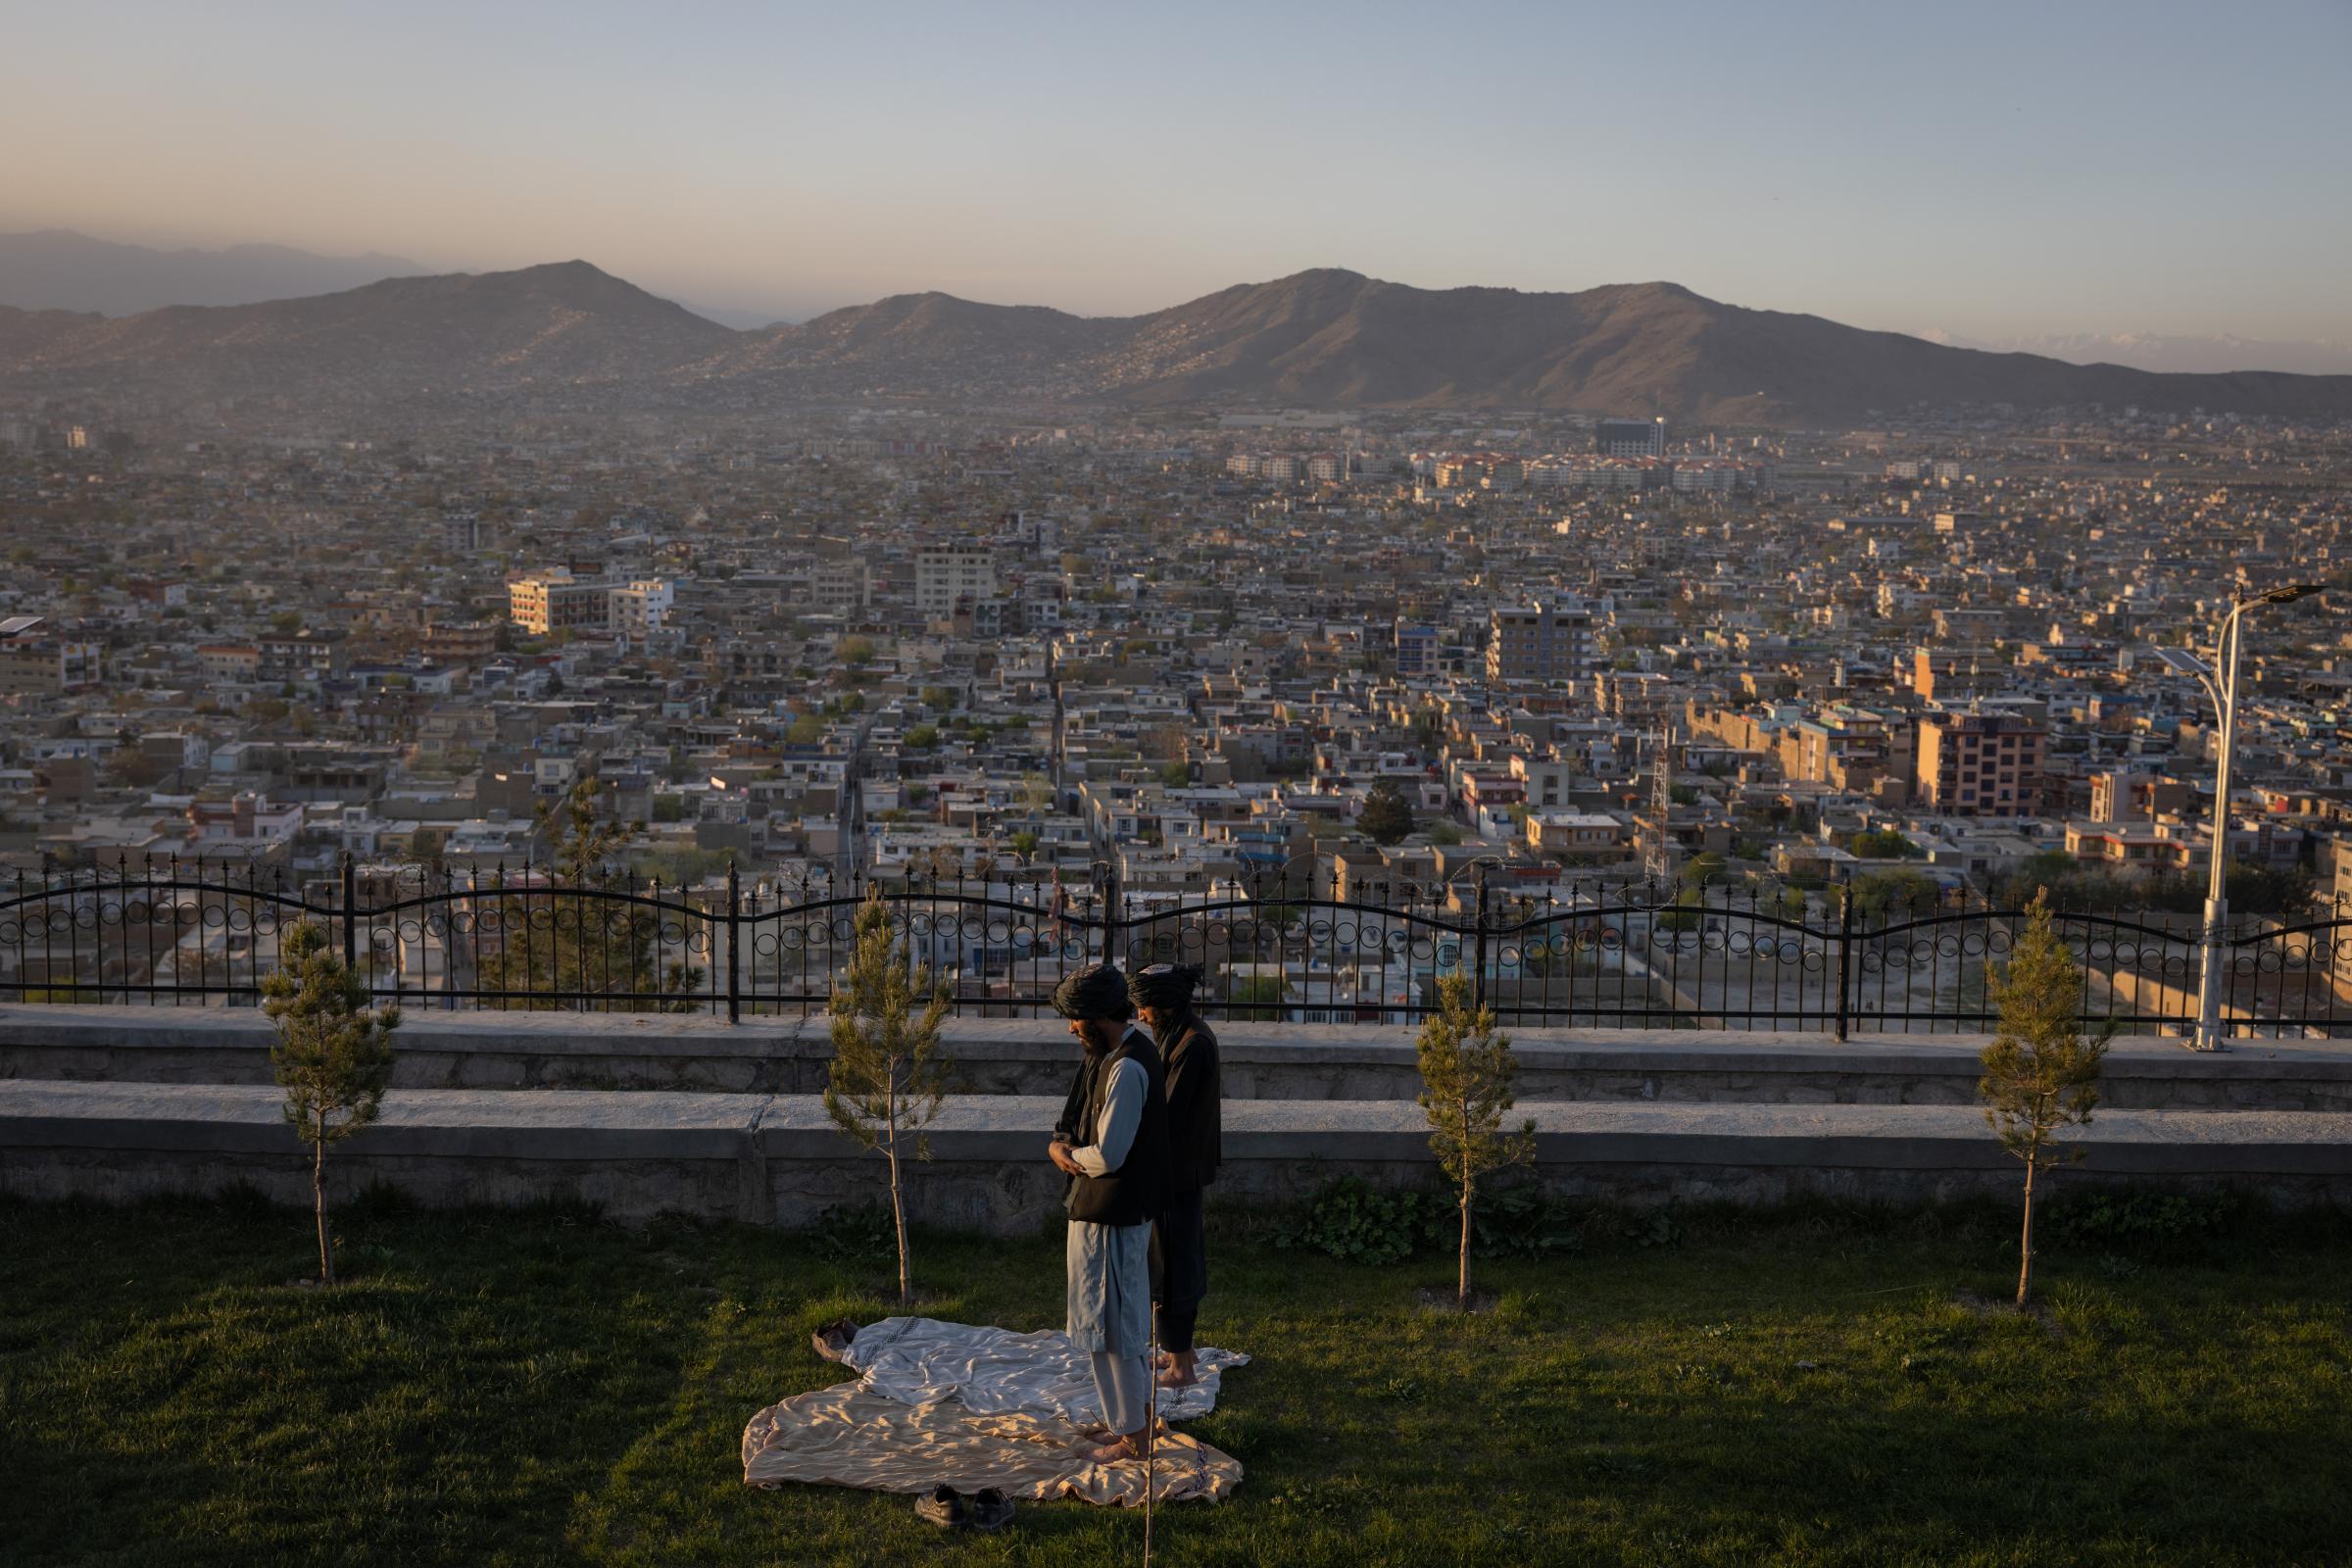 Two Taliban pray in the evening sun on Wazir Akbar Khan hill in Kabul.